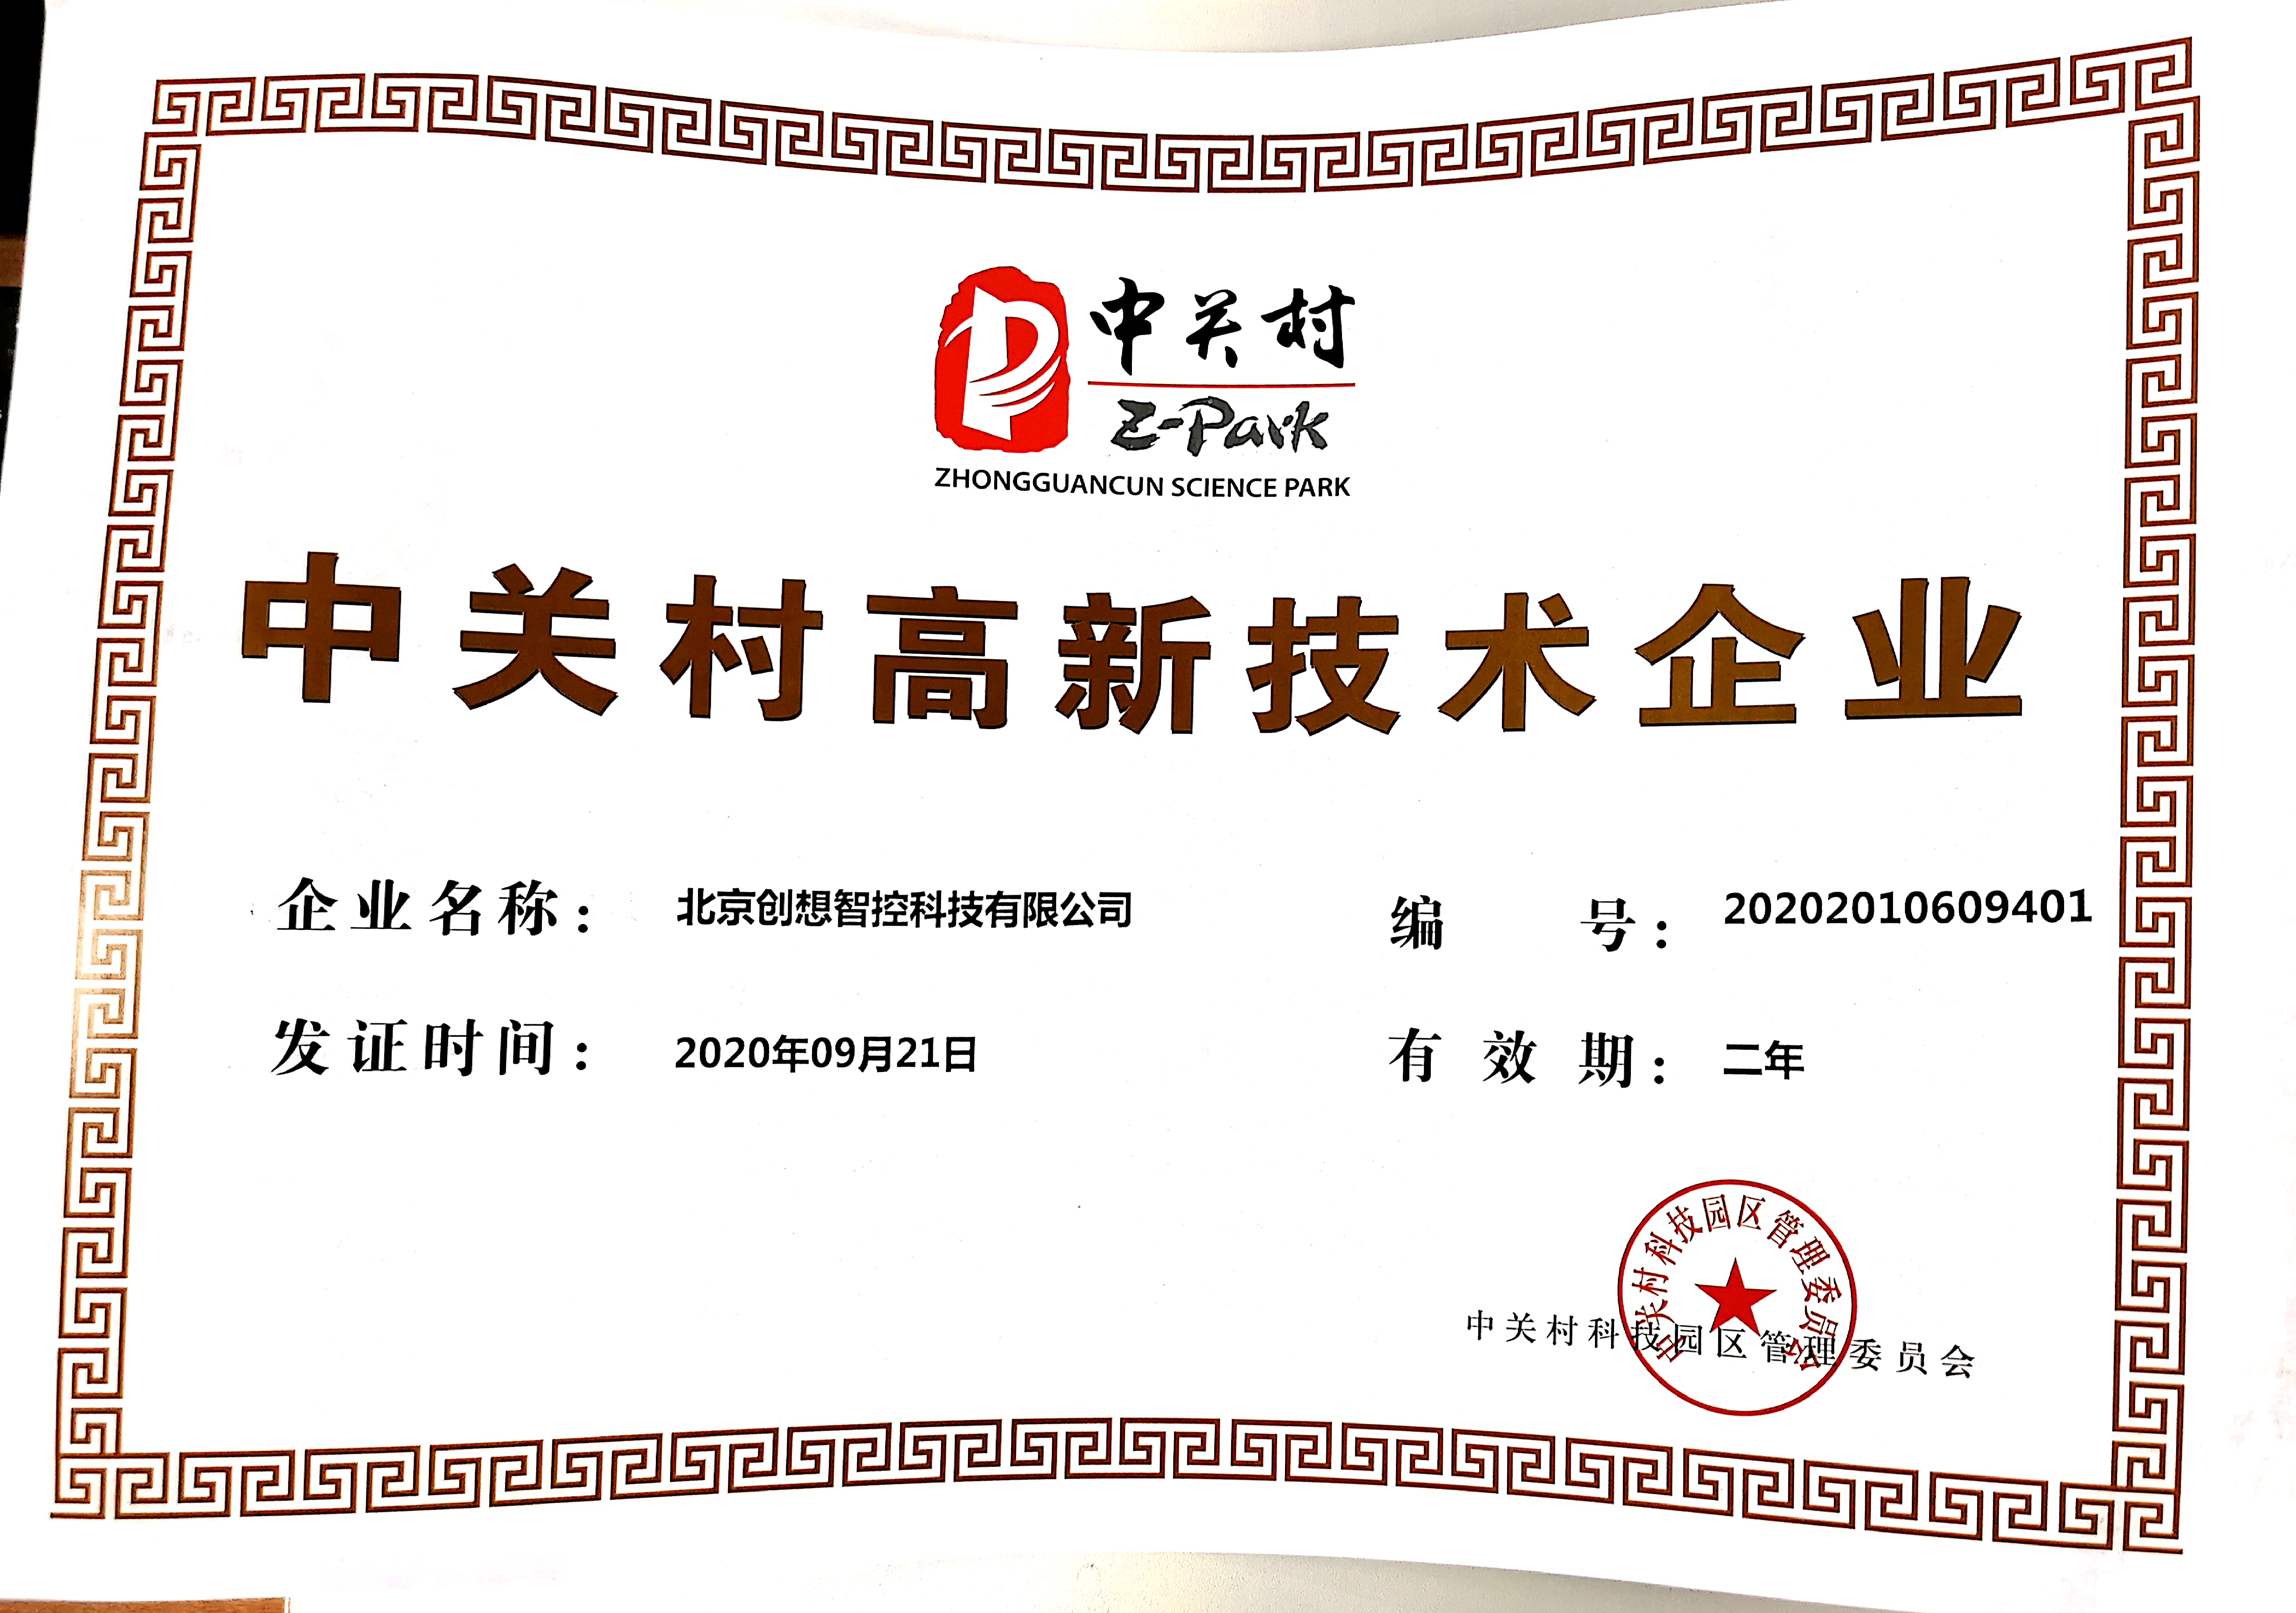 The latest version of Zhongguancun High-tech Certificate